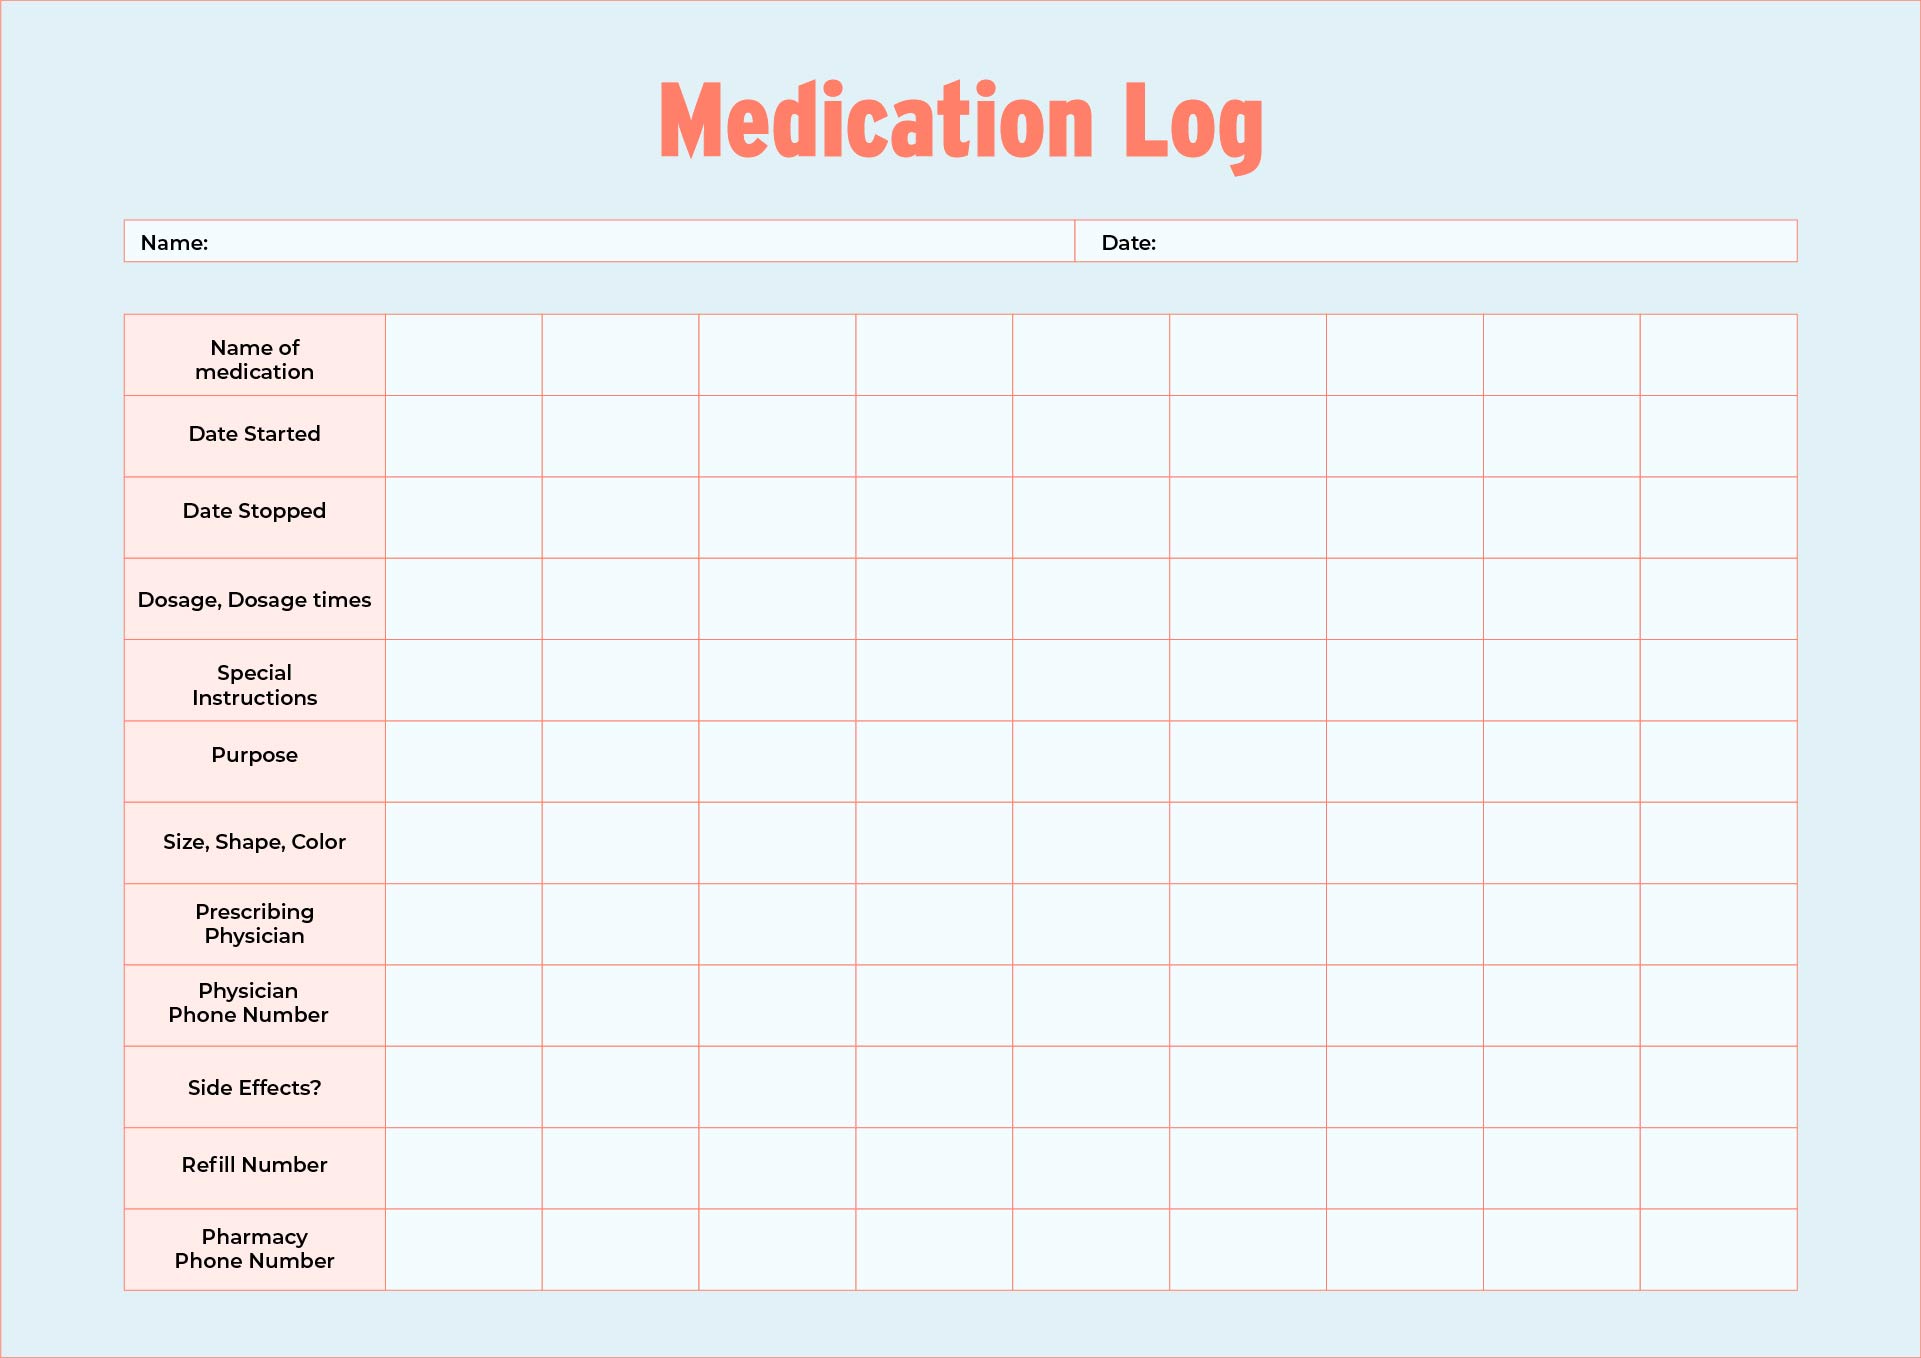 Printable Daily Medication Log Sheet